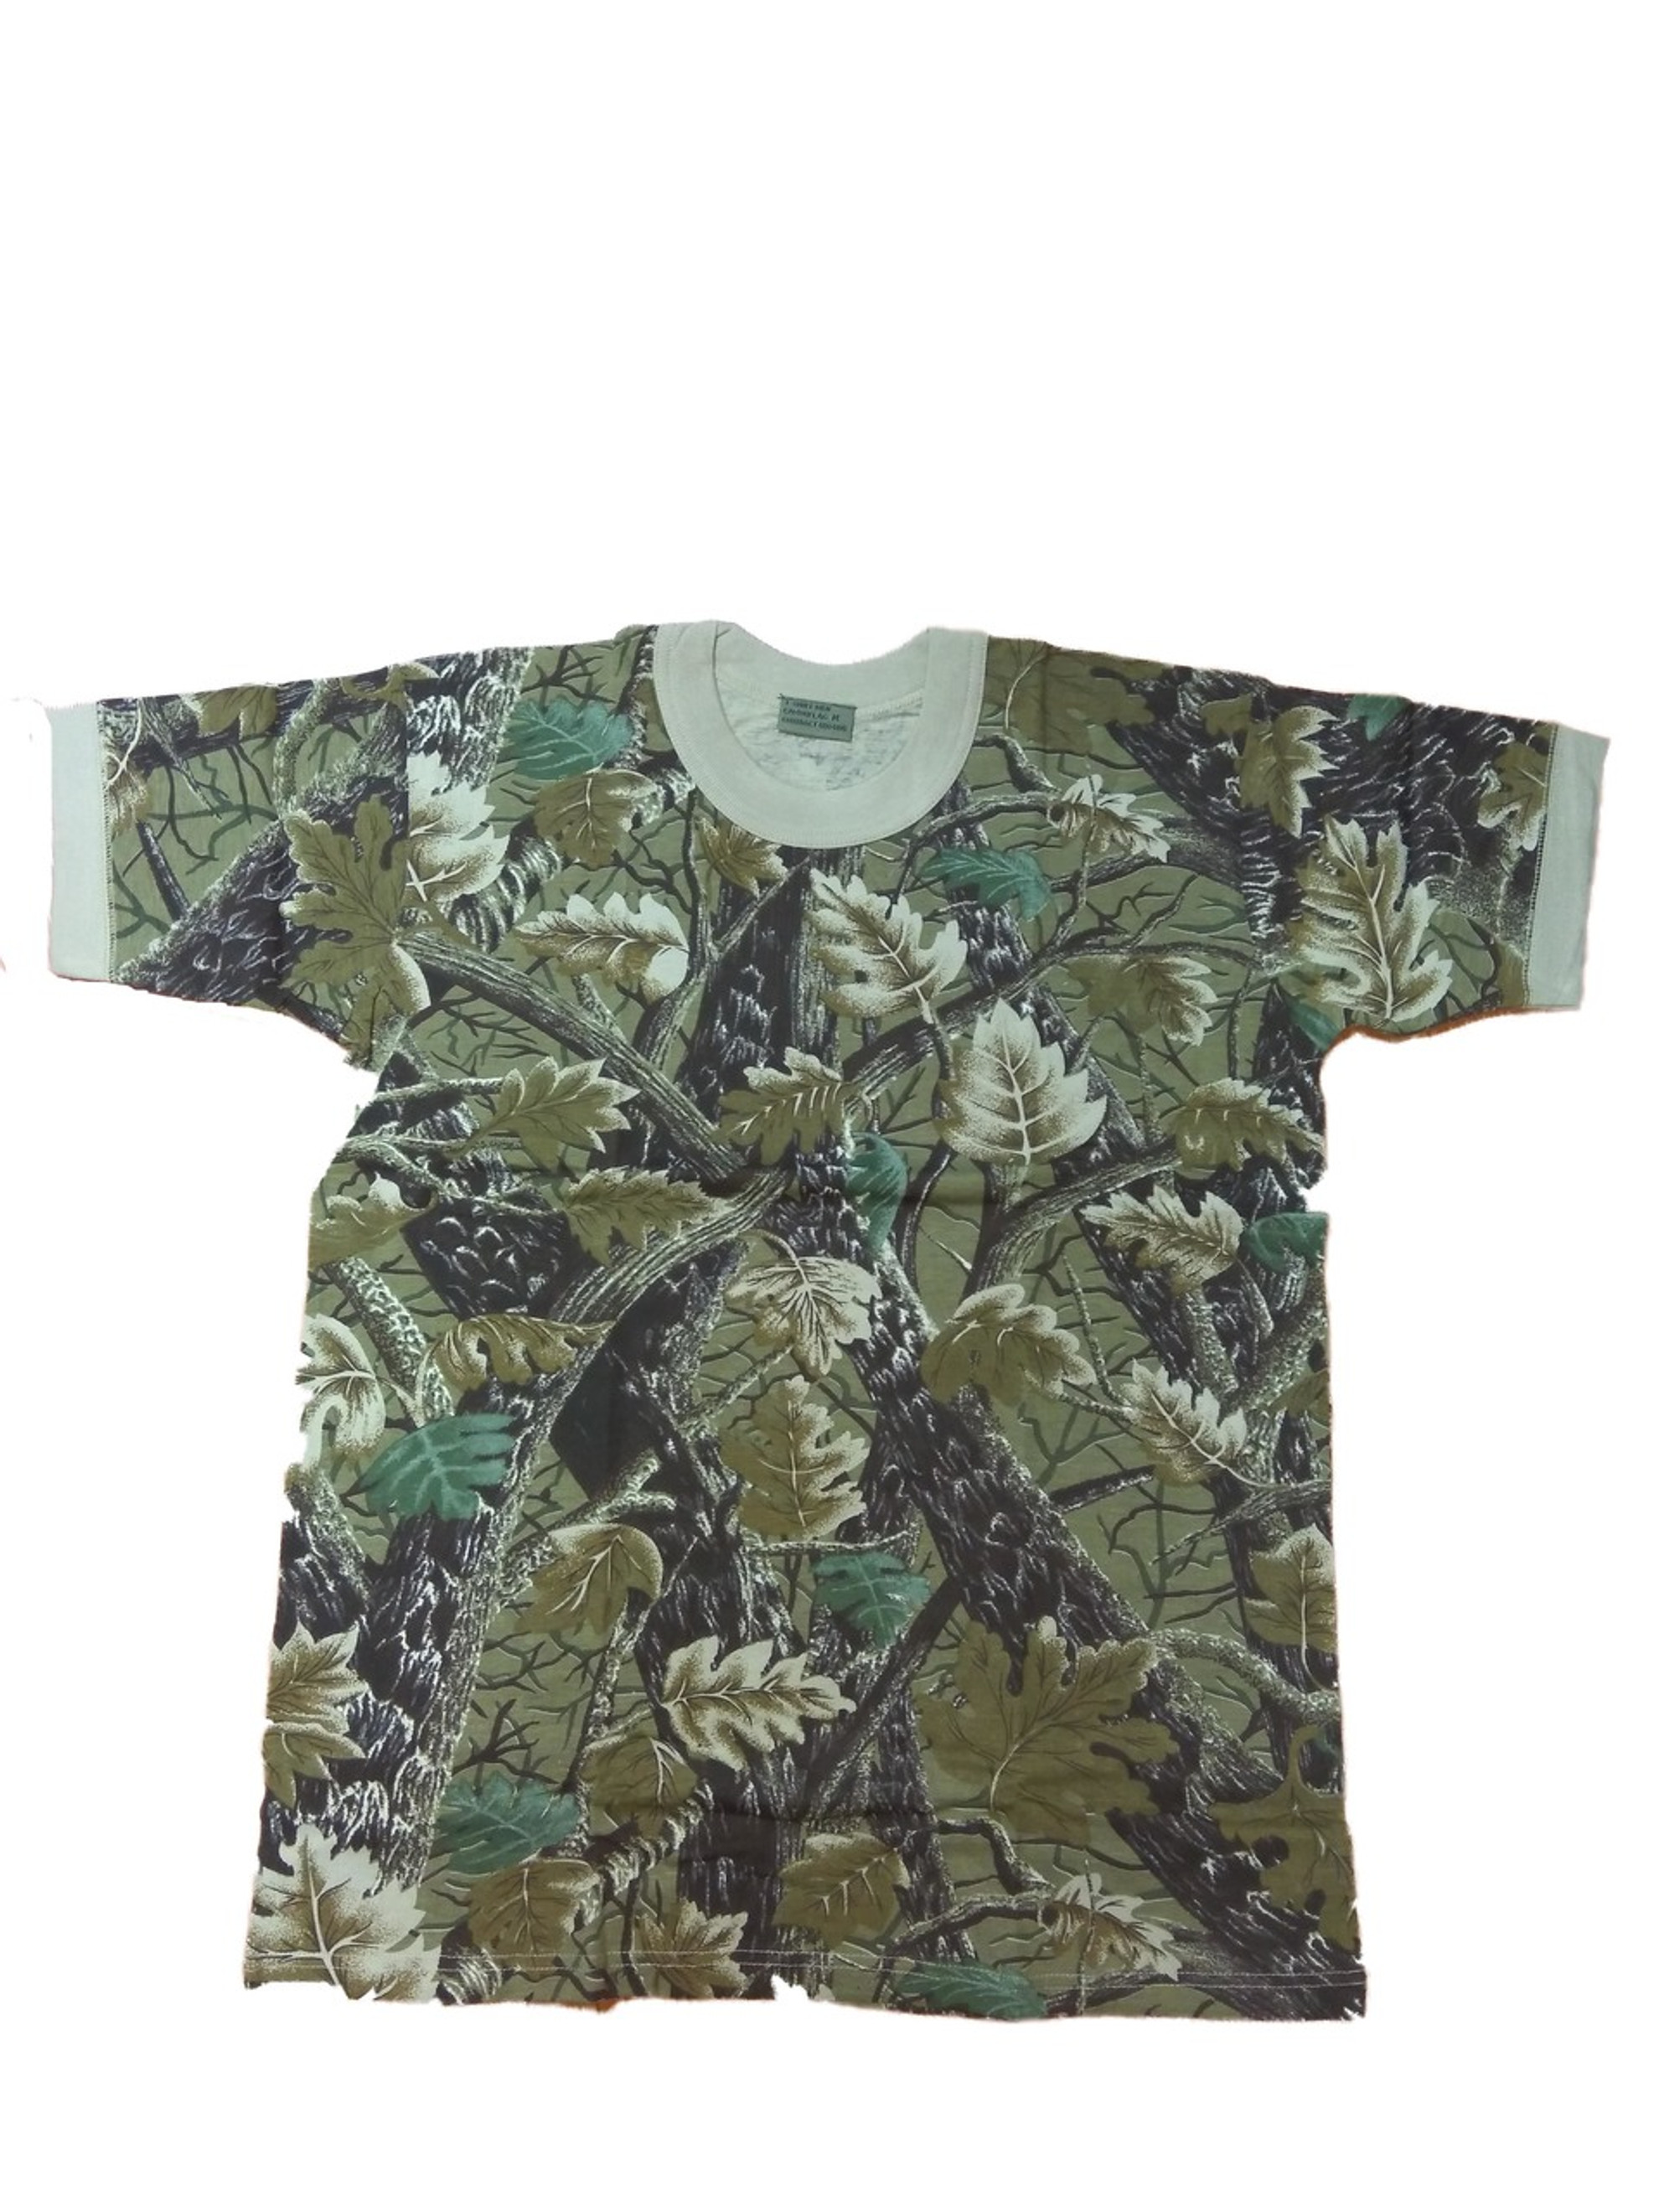 Hero Brand Tru Forest  Camouflage T-Shirt